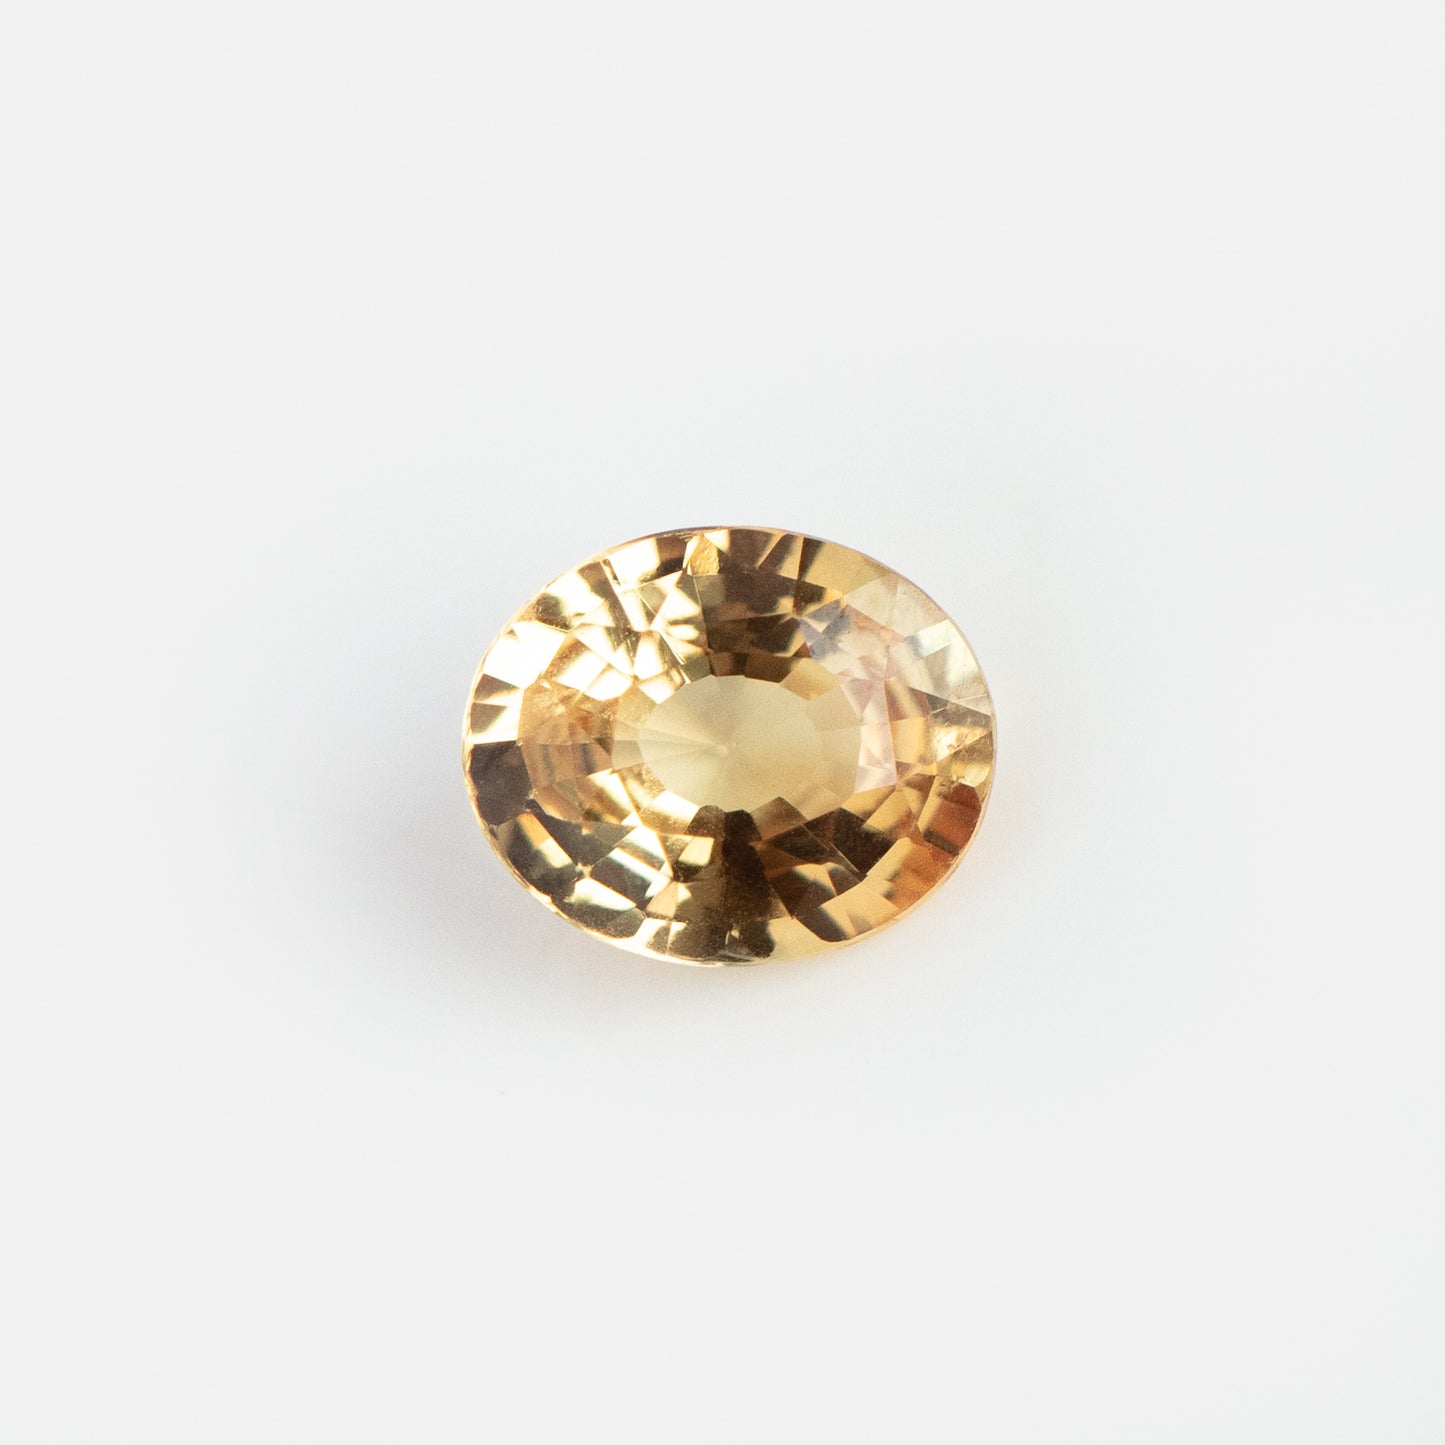 Oval Golden Sapphire Loose Gemstone